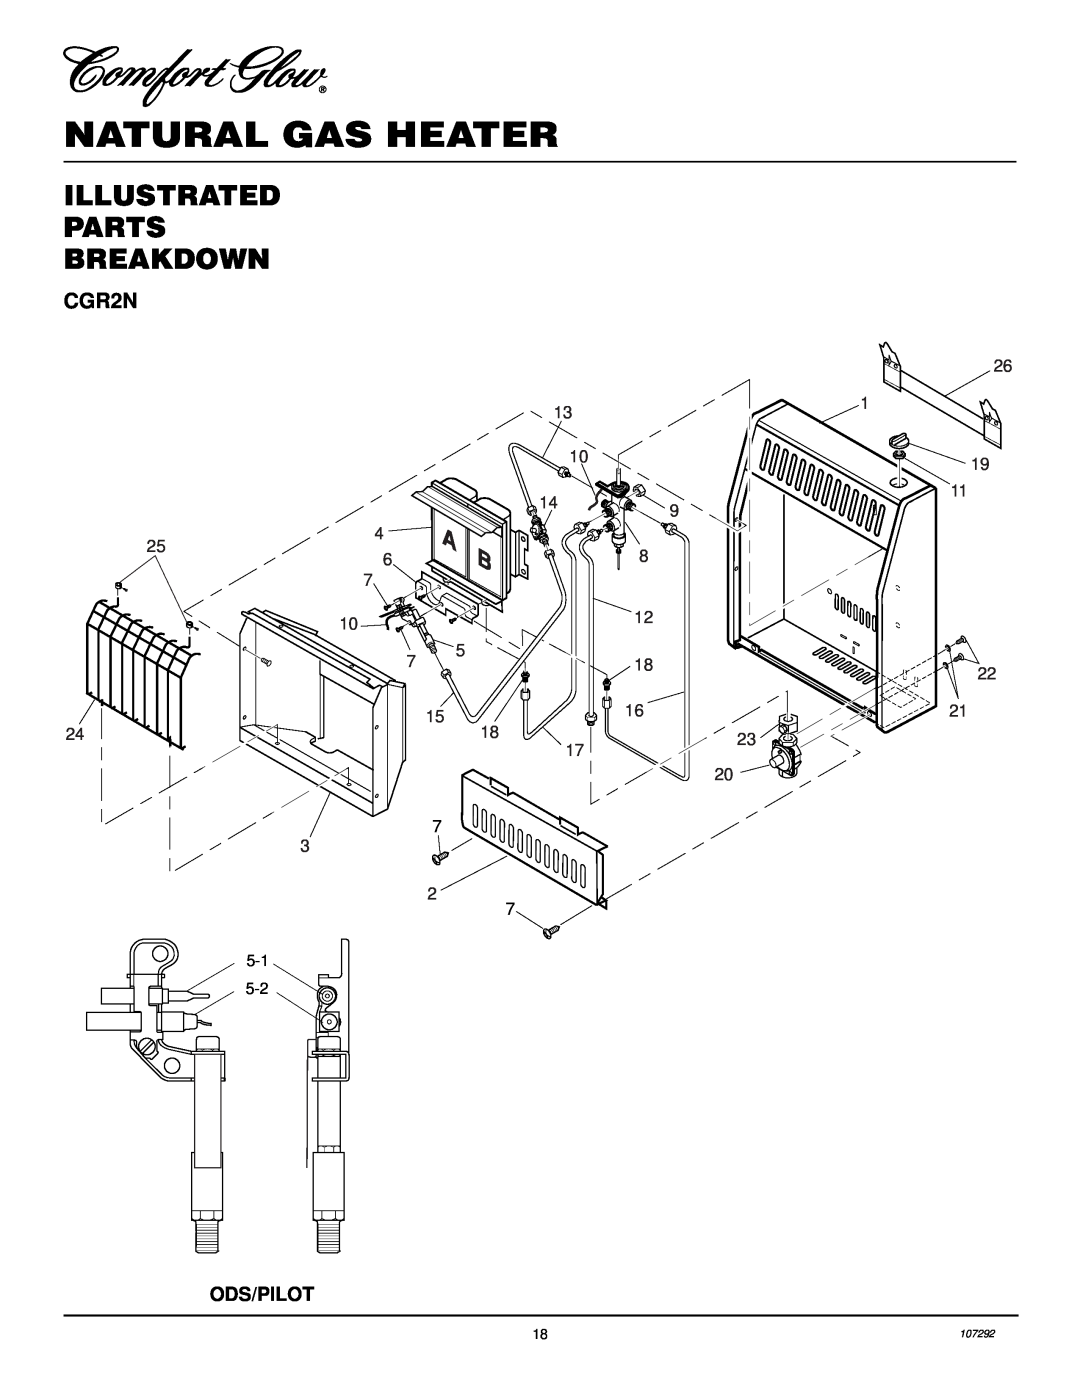 Desa CGR2N installation manual Illustrated Parts Breakdown, Natural Gas Heater, 107292 